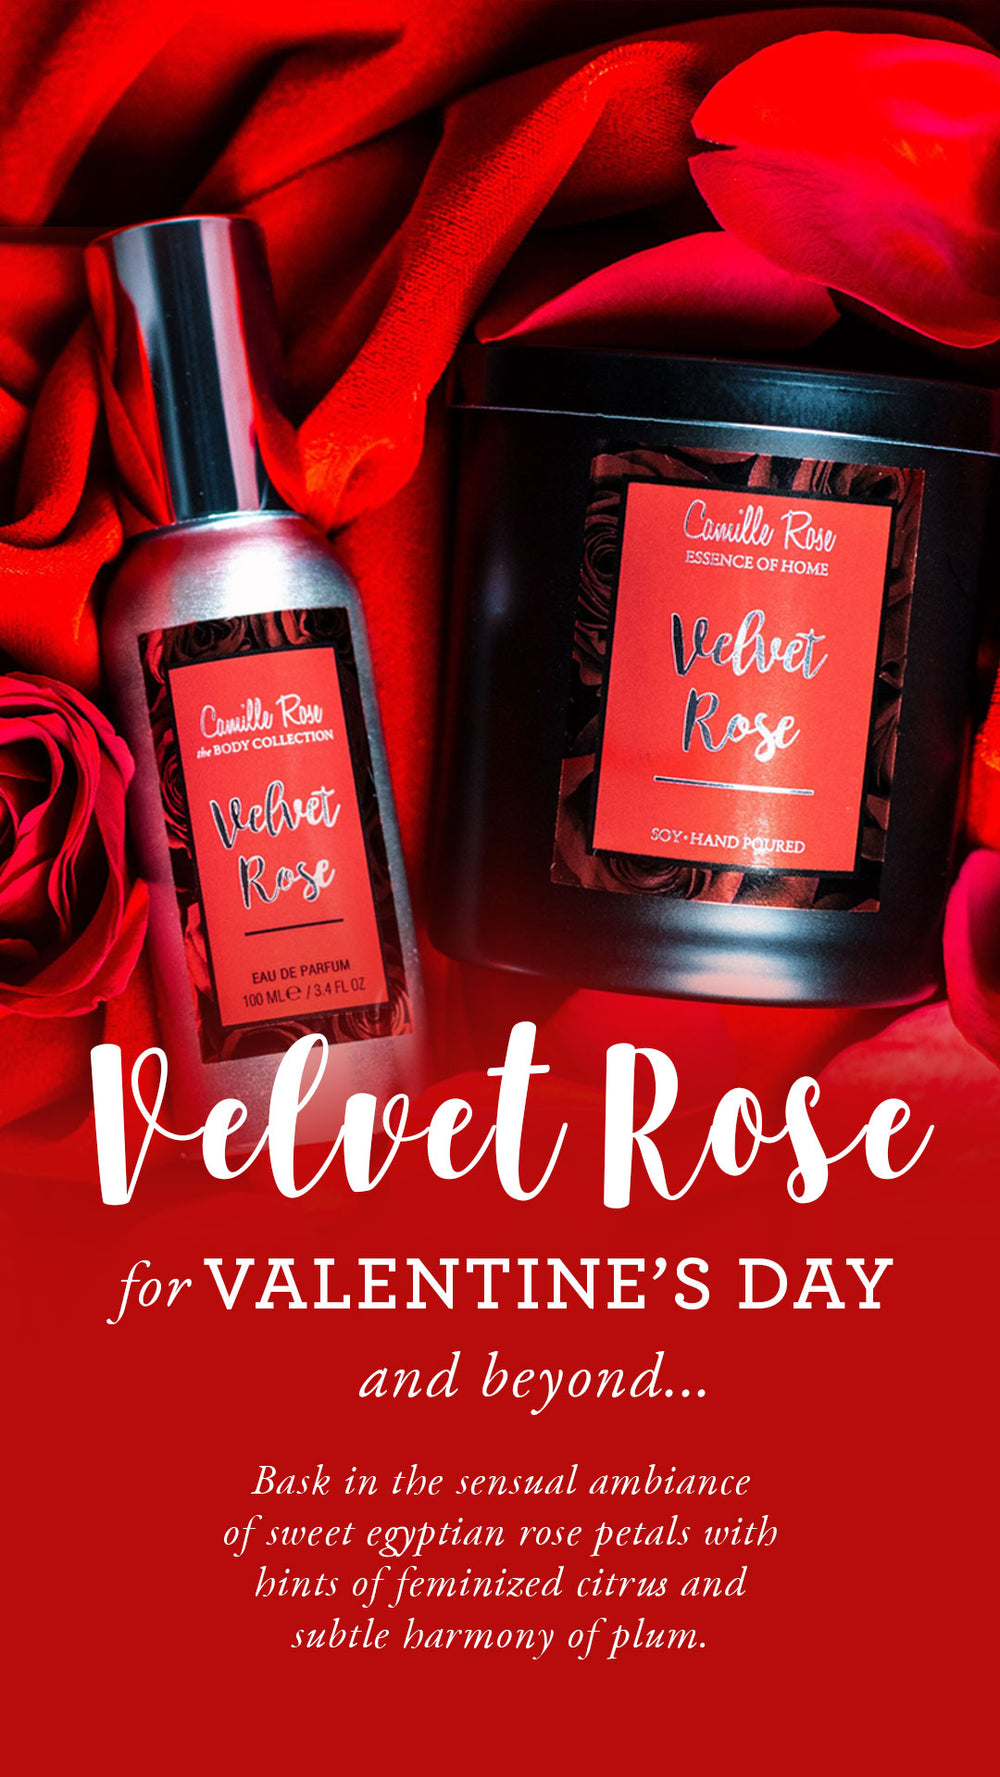 Here’s Why Camille Rose’s Velvet Rose Parfum is The Best Gift For Rose Day